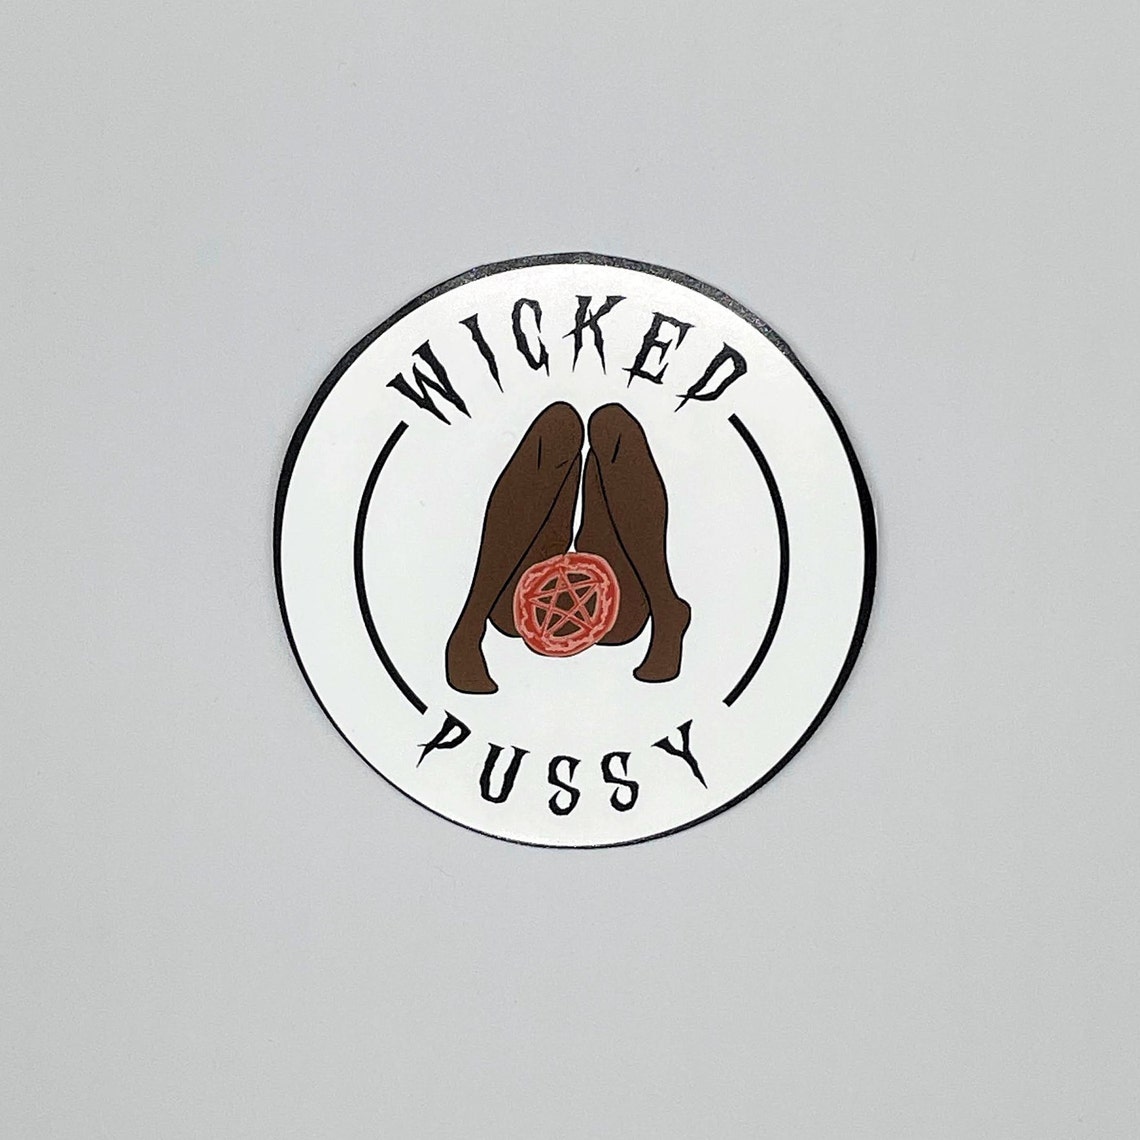 NSFW Wicked Pussy Vinyl Sticker Multiple Skin Tones Etsy